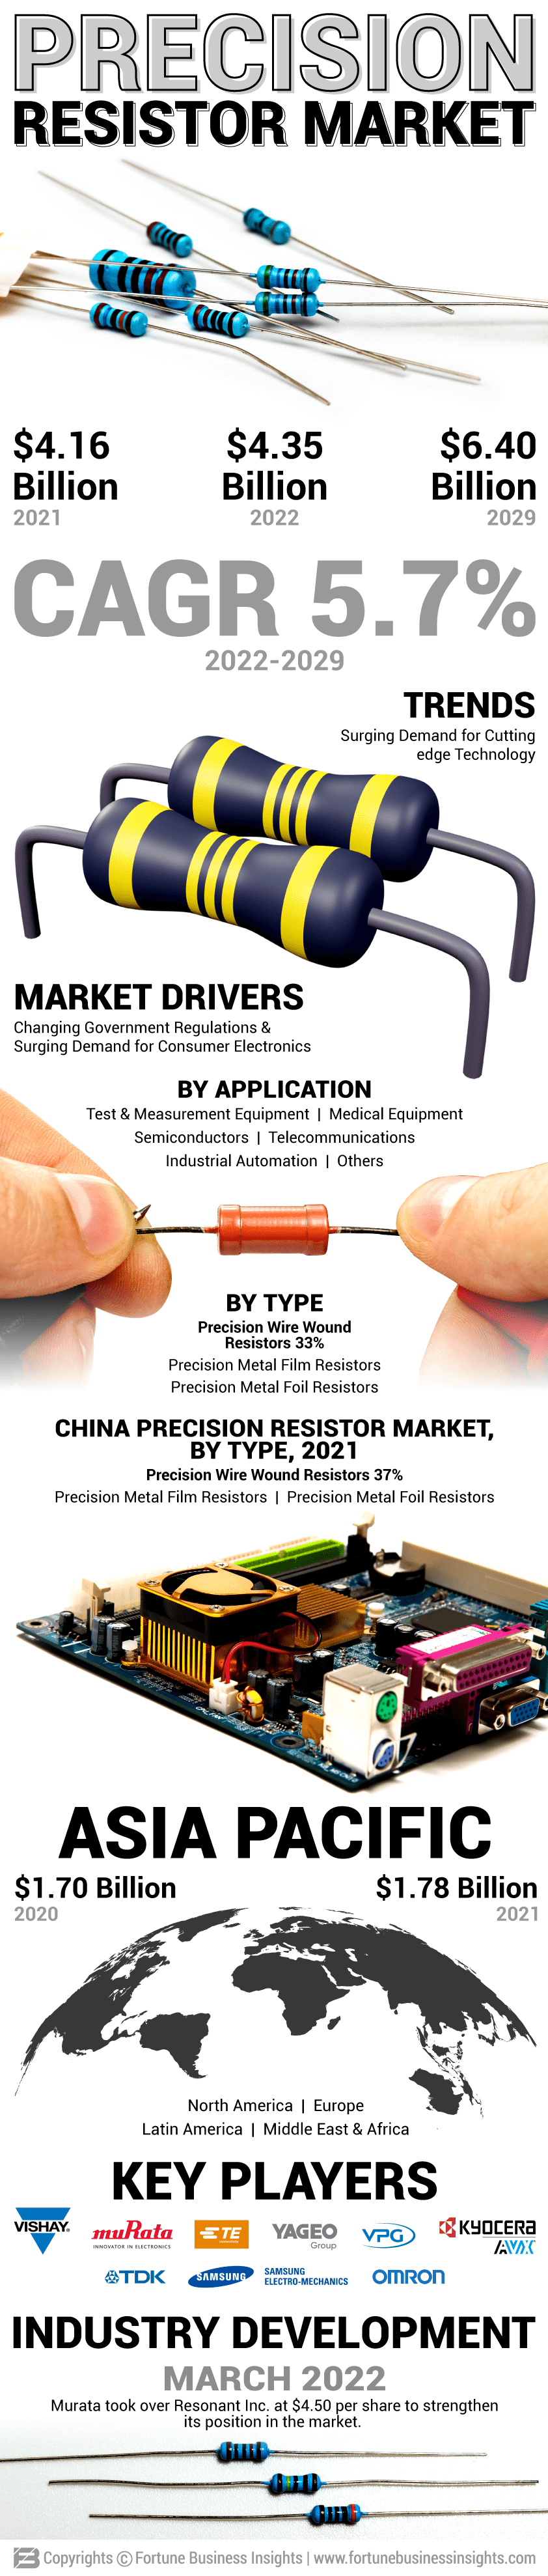 Precision Resistor Market